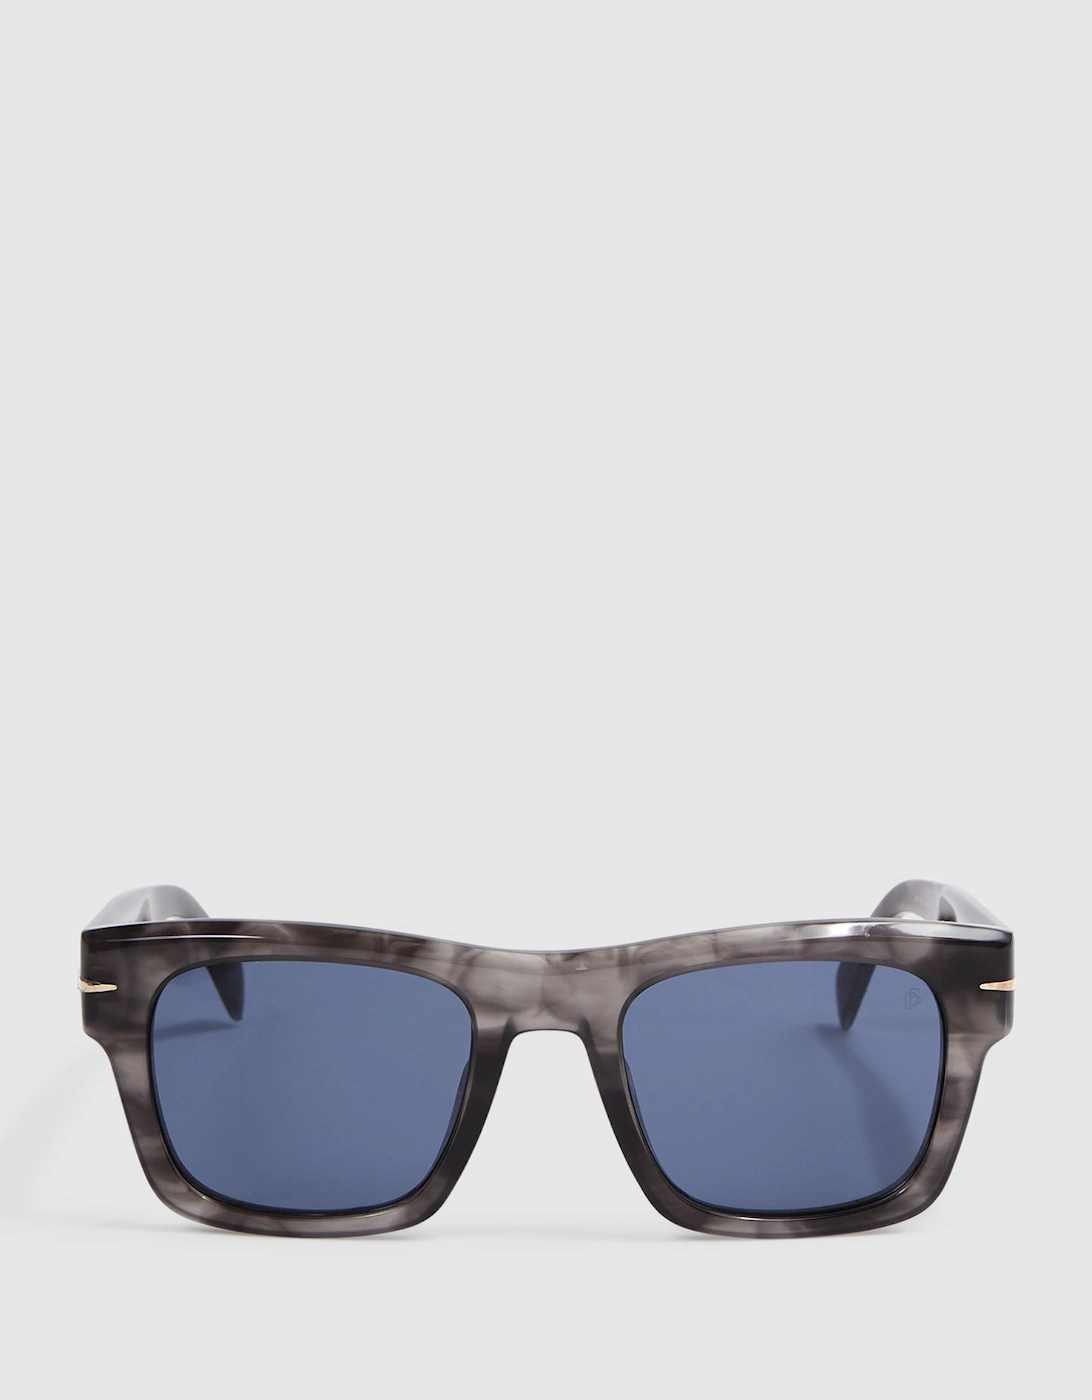 Eyewear by David Beckham Squared Mottled Sunglasses, 2 of 1